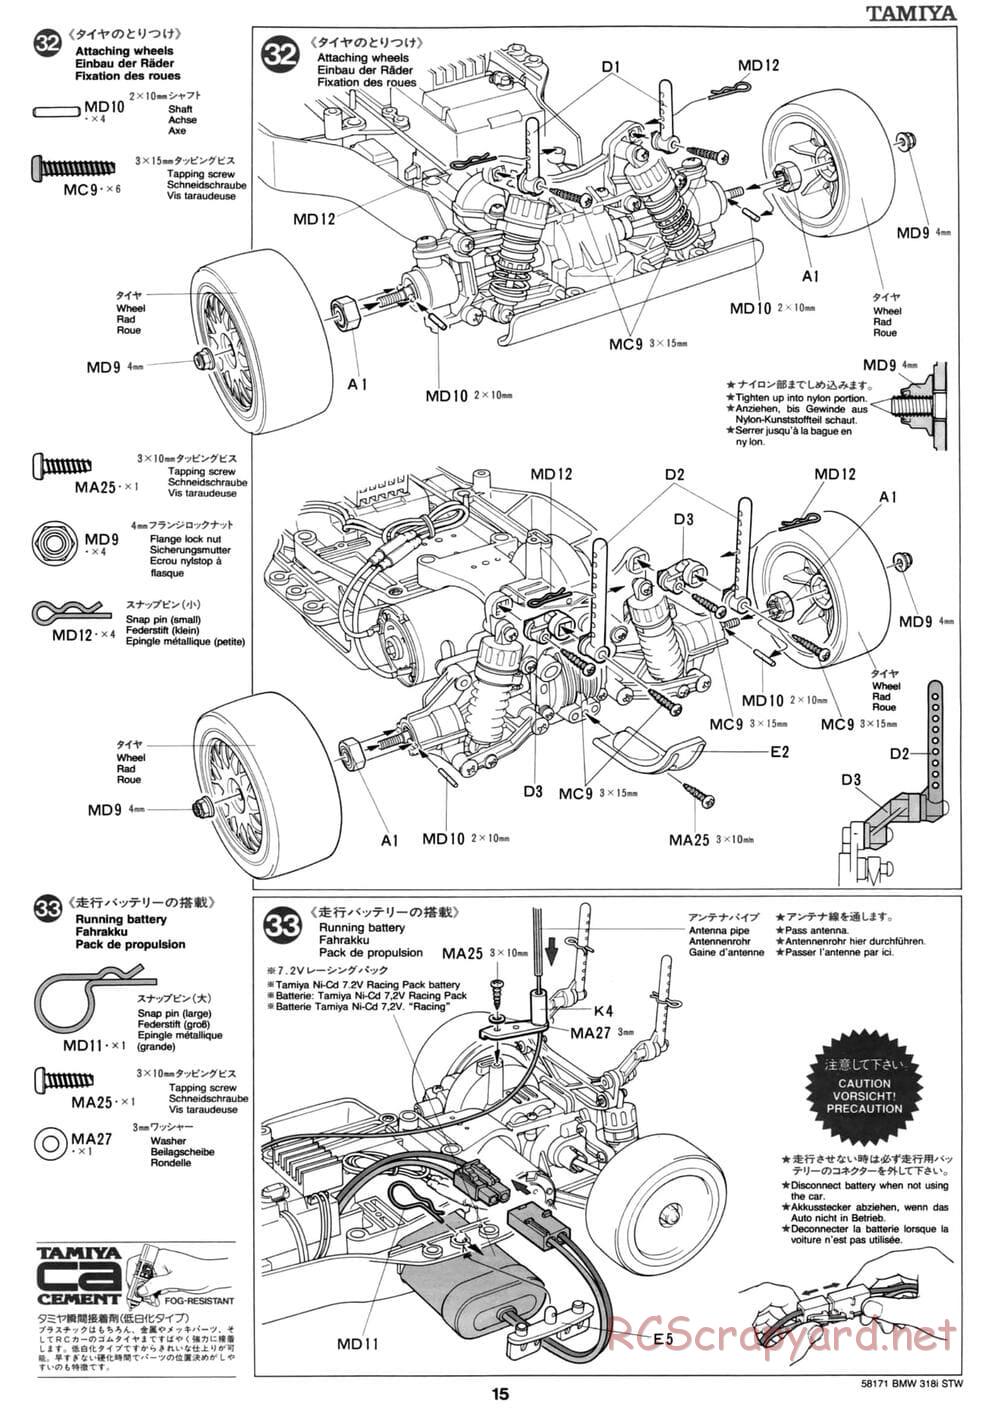 Tamiya - BMW 318i STW - TA-02 Chassis - Manual - Page 15